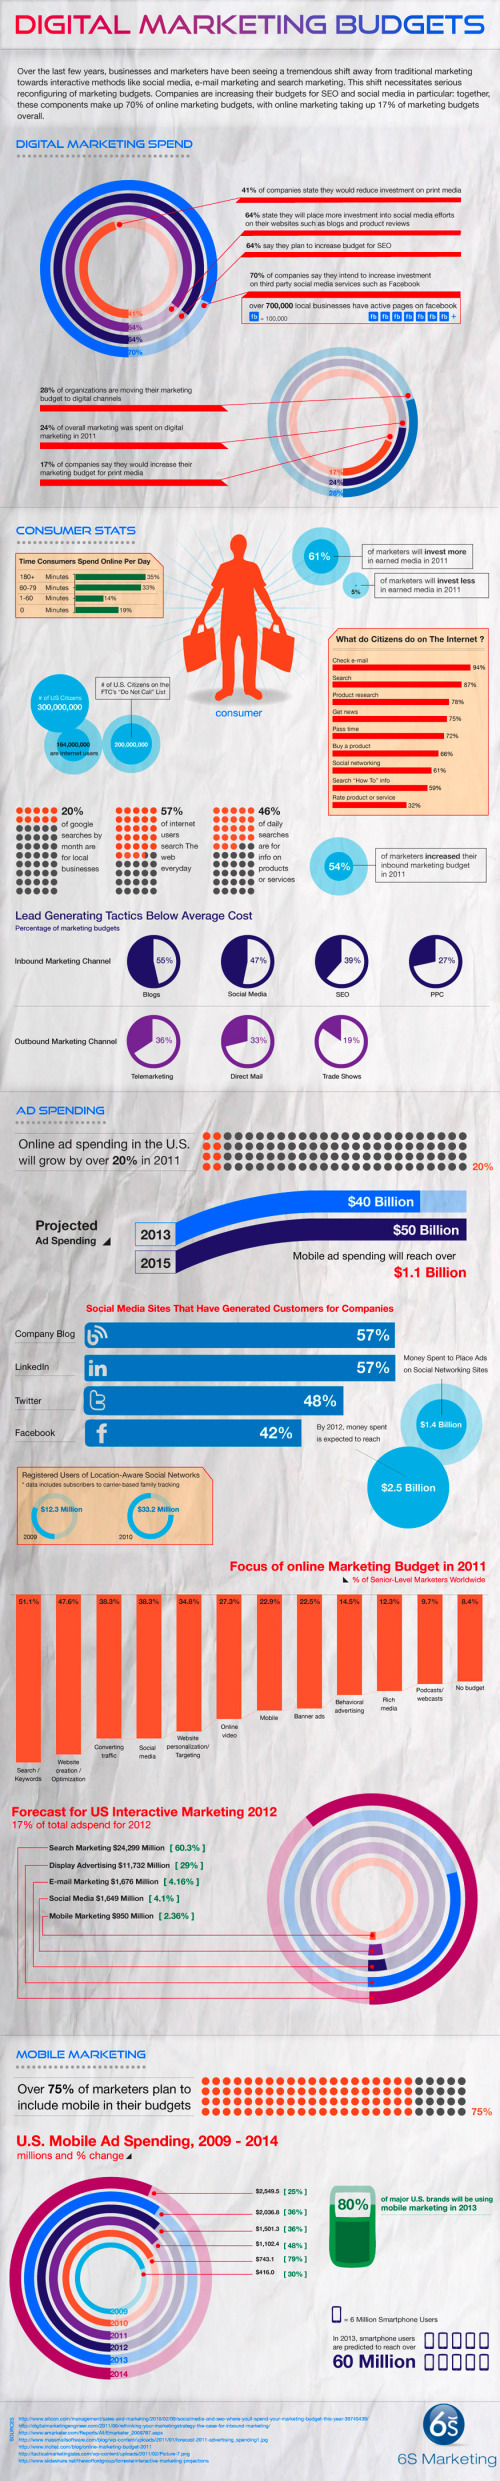 Digital Marketing Budgets 2012 Infographic